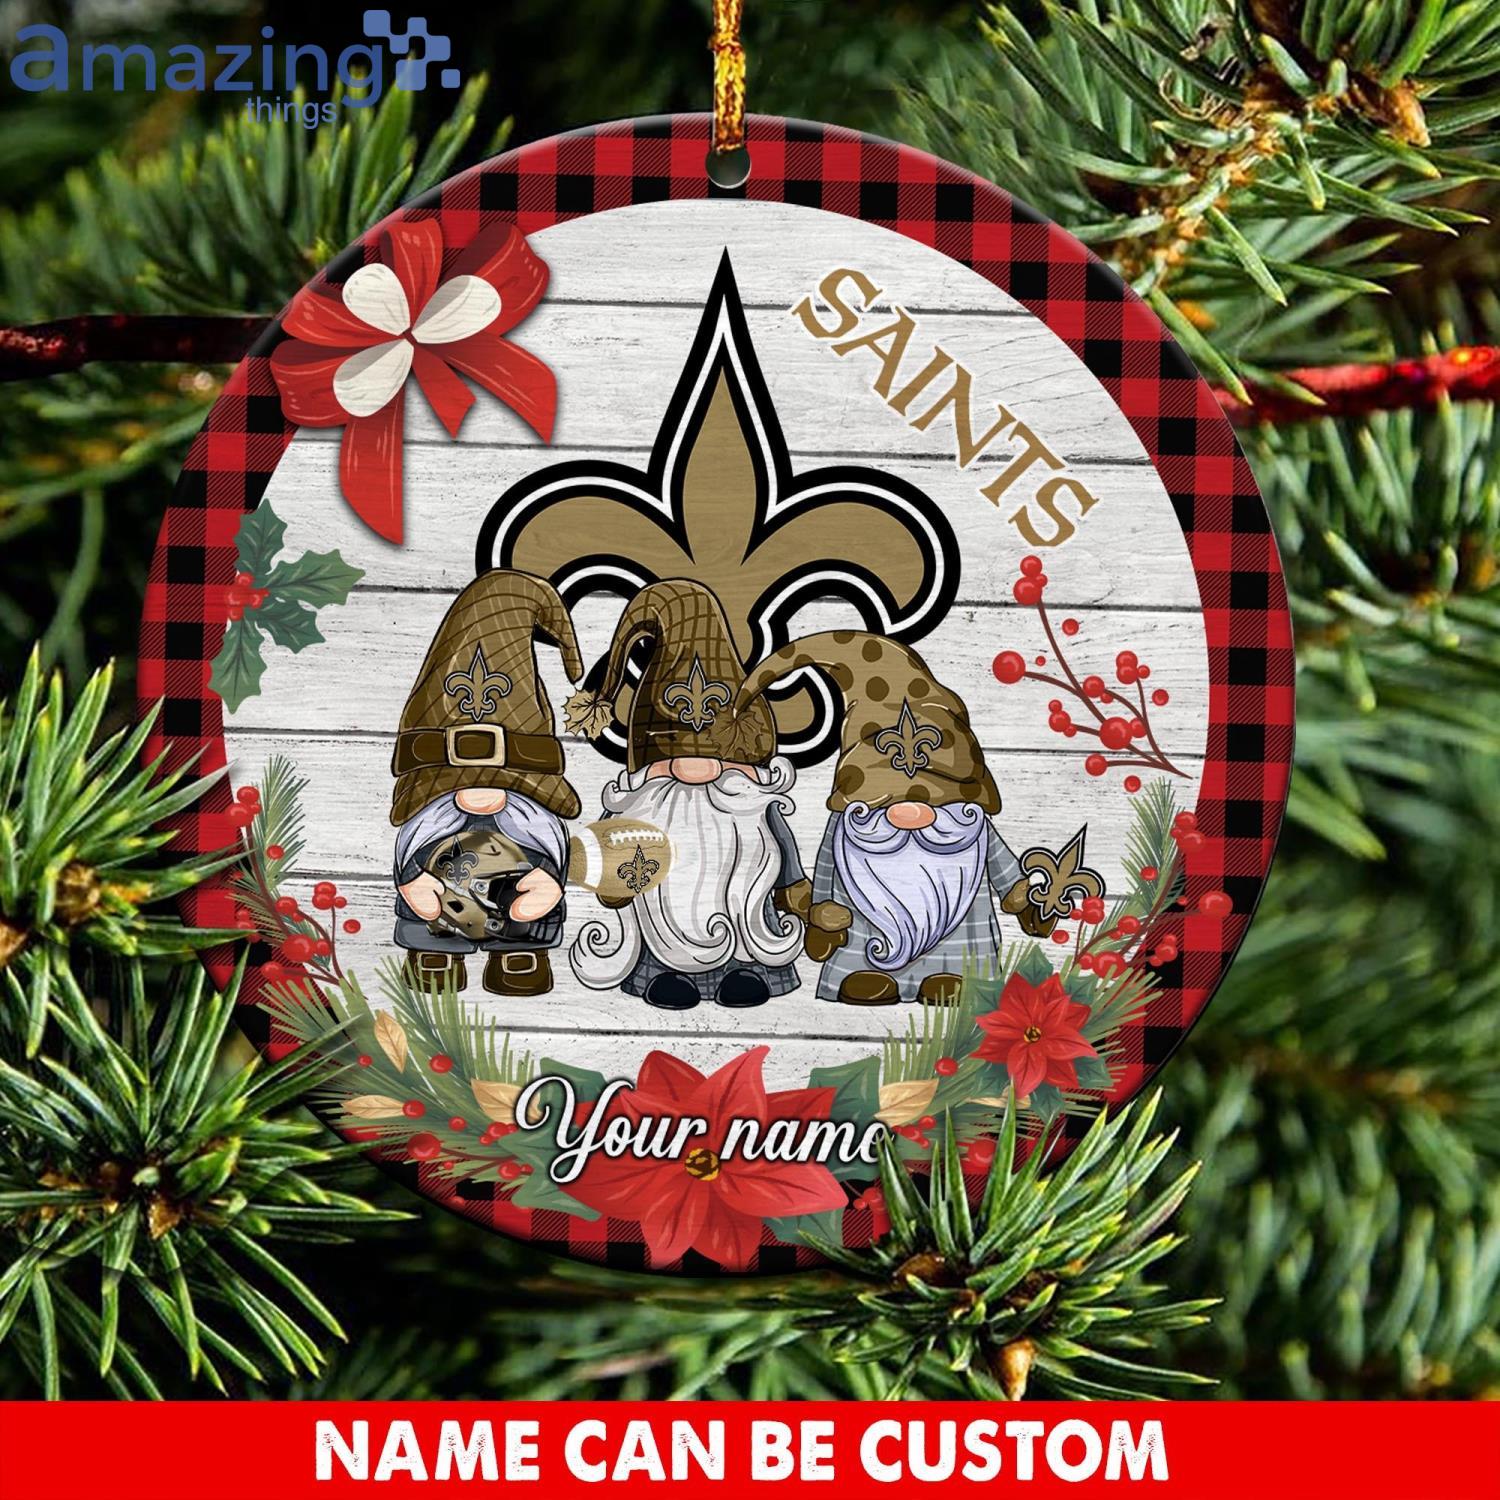 New Orleans Saints NFL Fans Personalized Christmas Ornaments